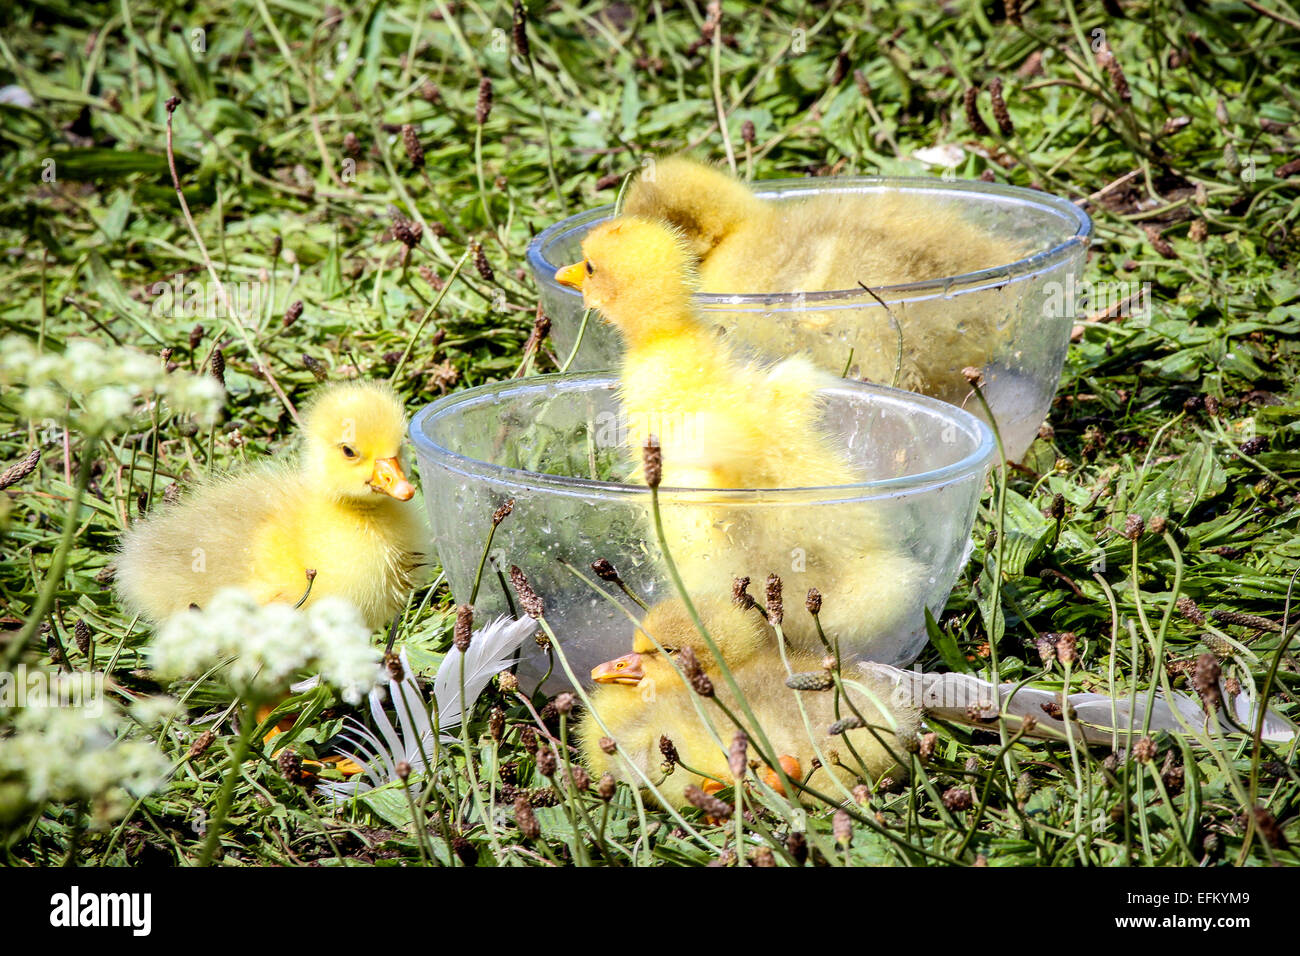 Goslings (baby geese) bathing in glass bowls in garden Stock Photo